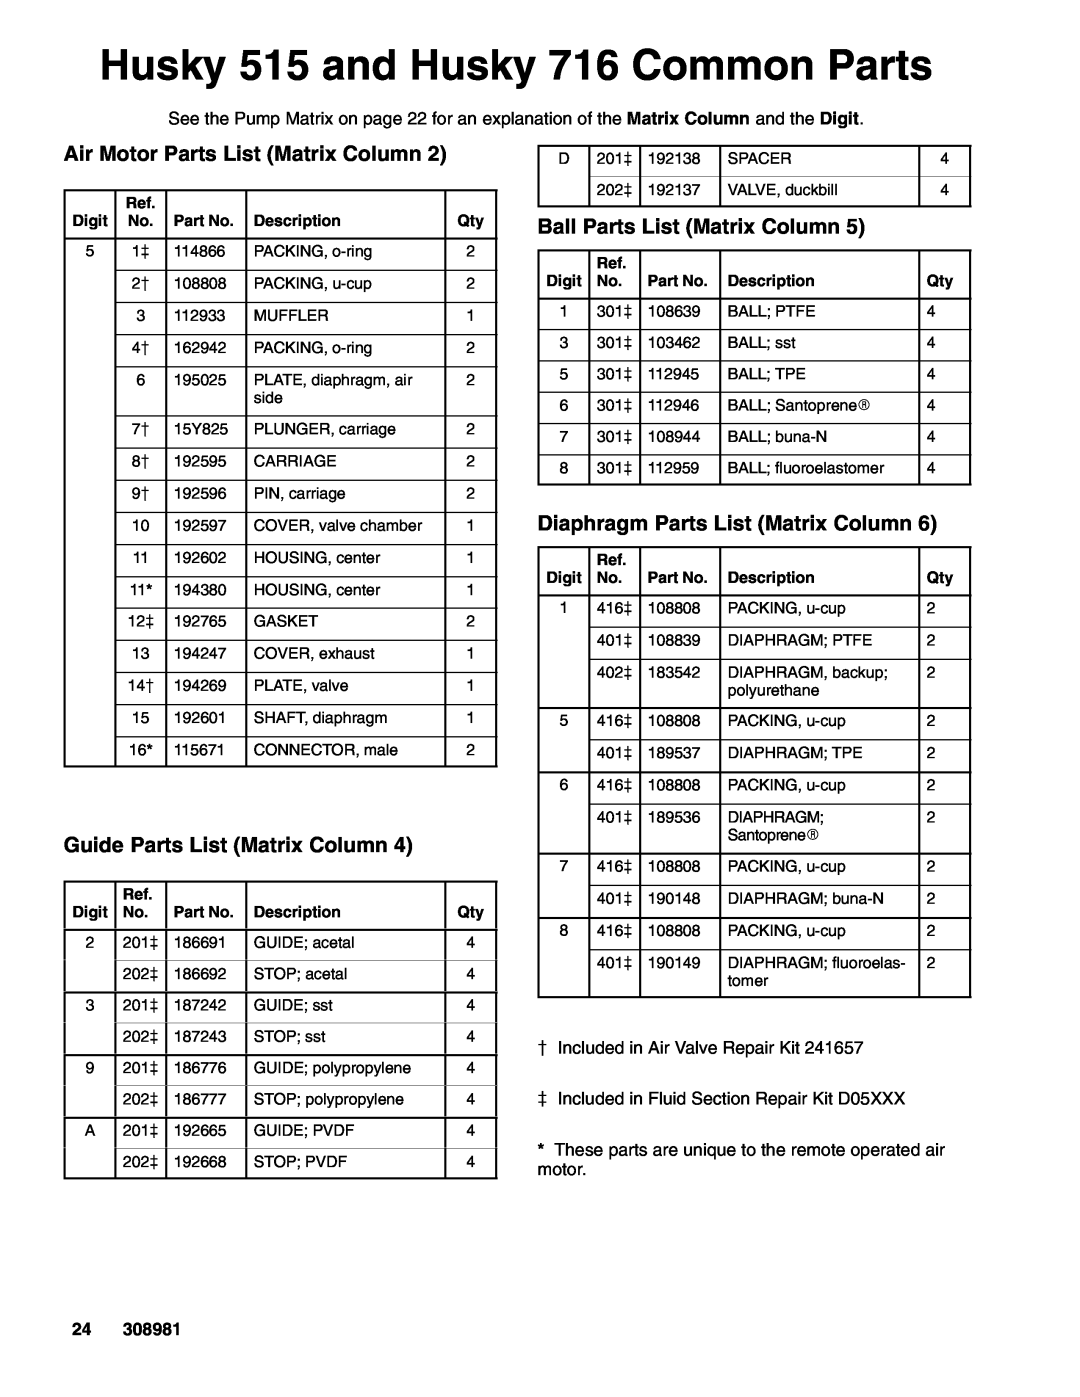 Graco Inc D 5 3 Husky 515 and Husky 716 Common Parts, Air Motor Parts List Matrix Column, Guide Parts List Matrix Column 